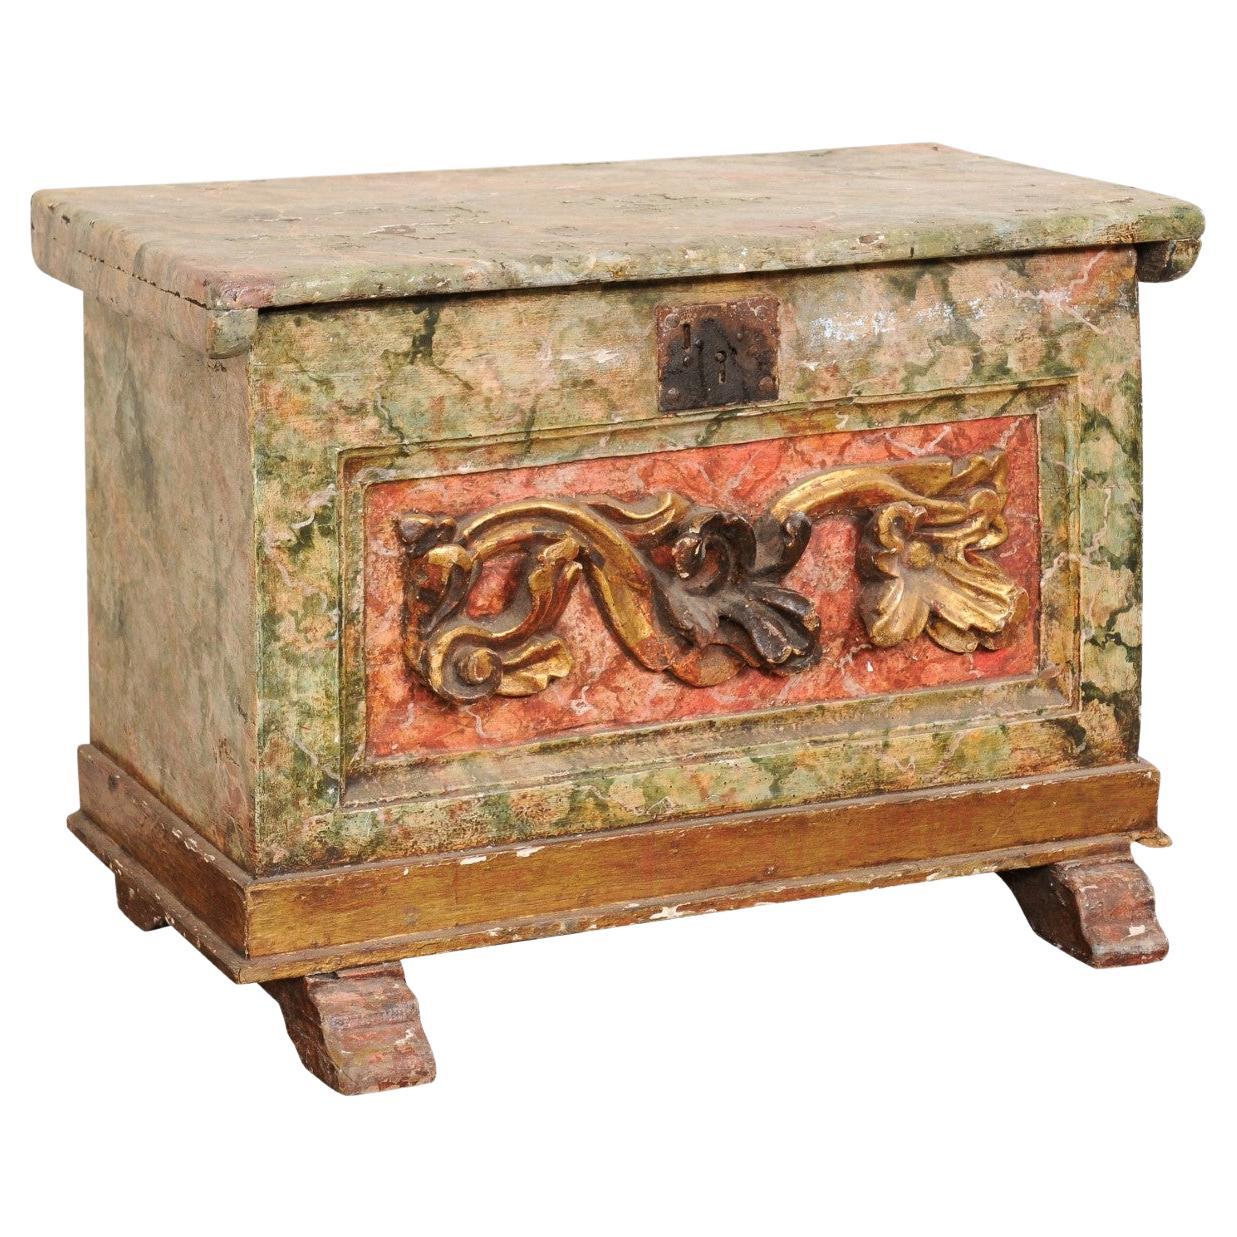 18th C. Venetian Italian Wood Box w/its Original Finish, 26.5" Wide